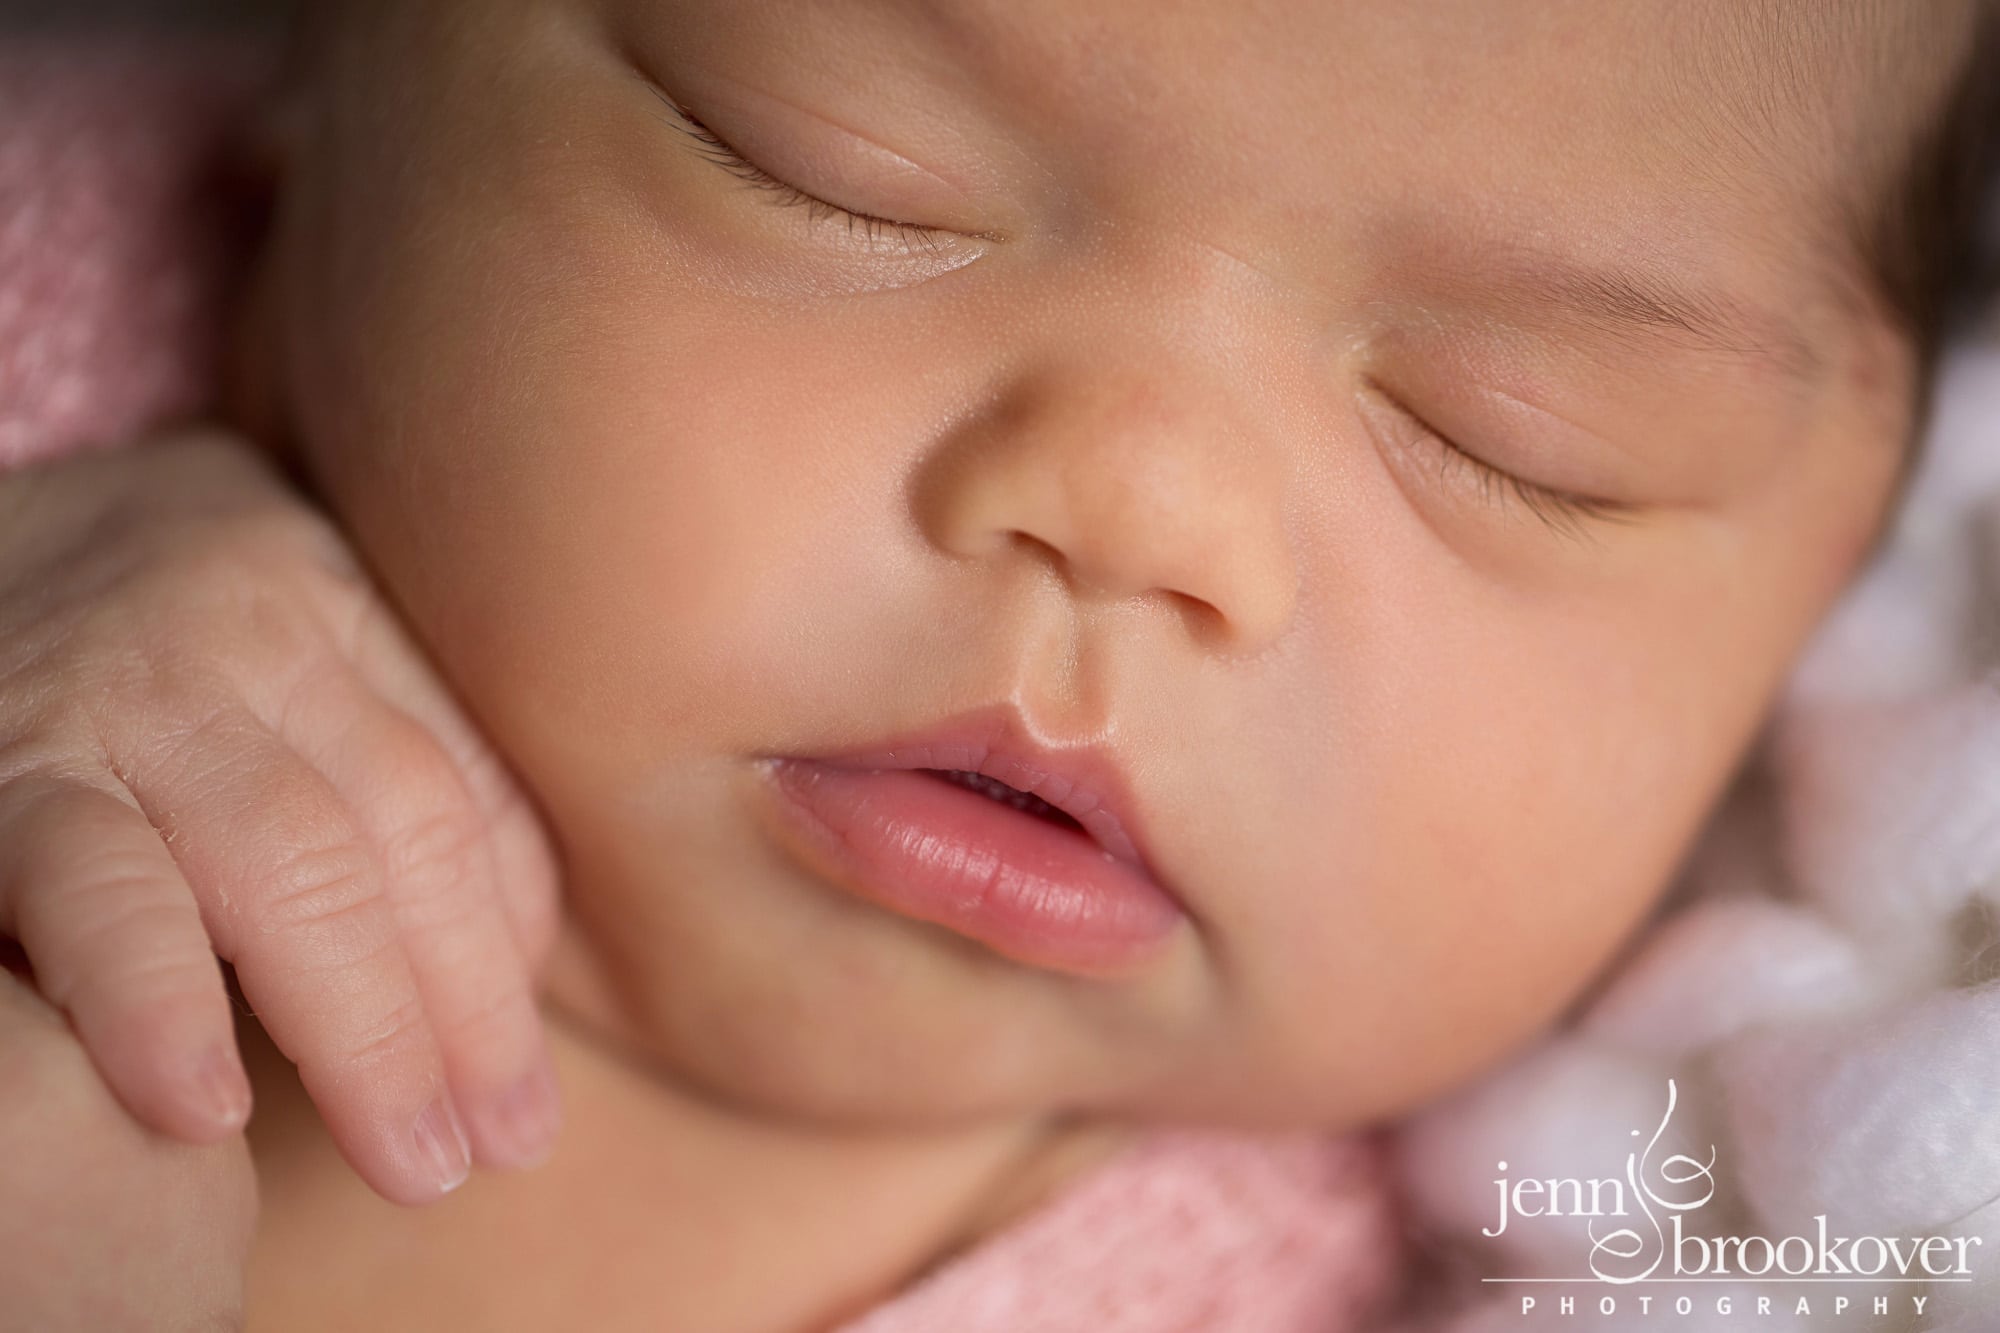 newborn portrait close up on hands, macro taken by Jenn Brookover in San Antonio Texas